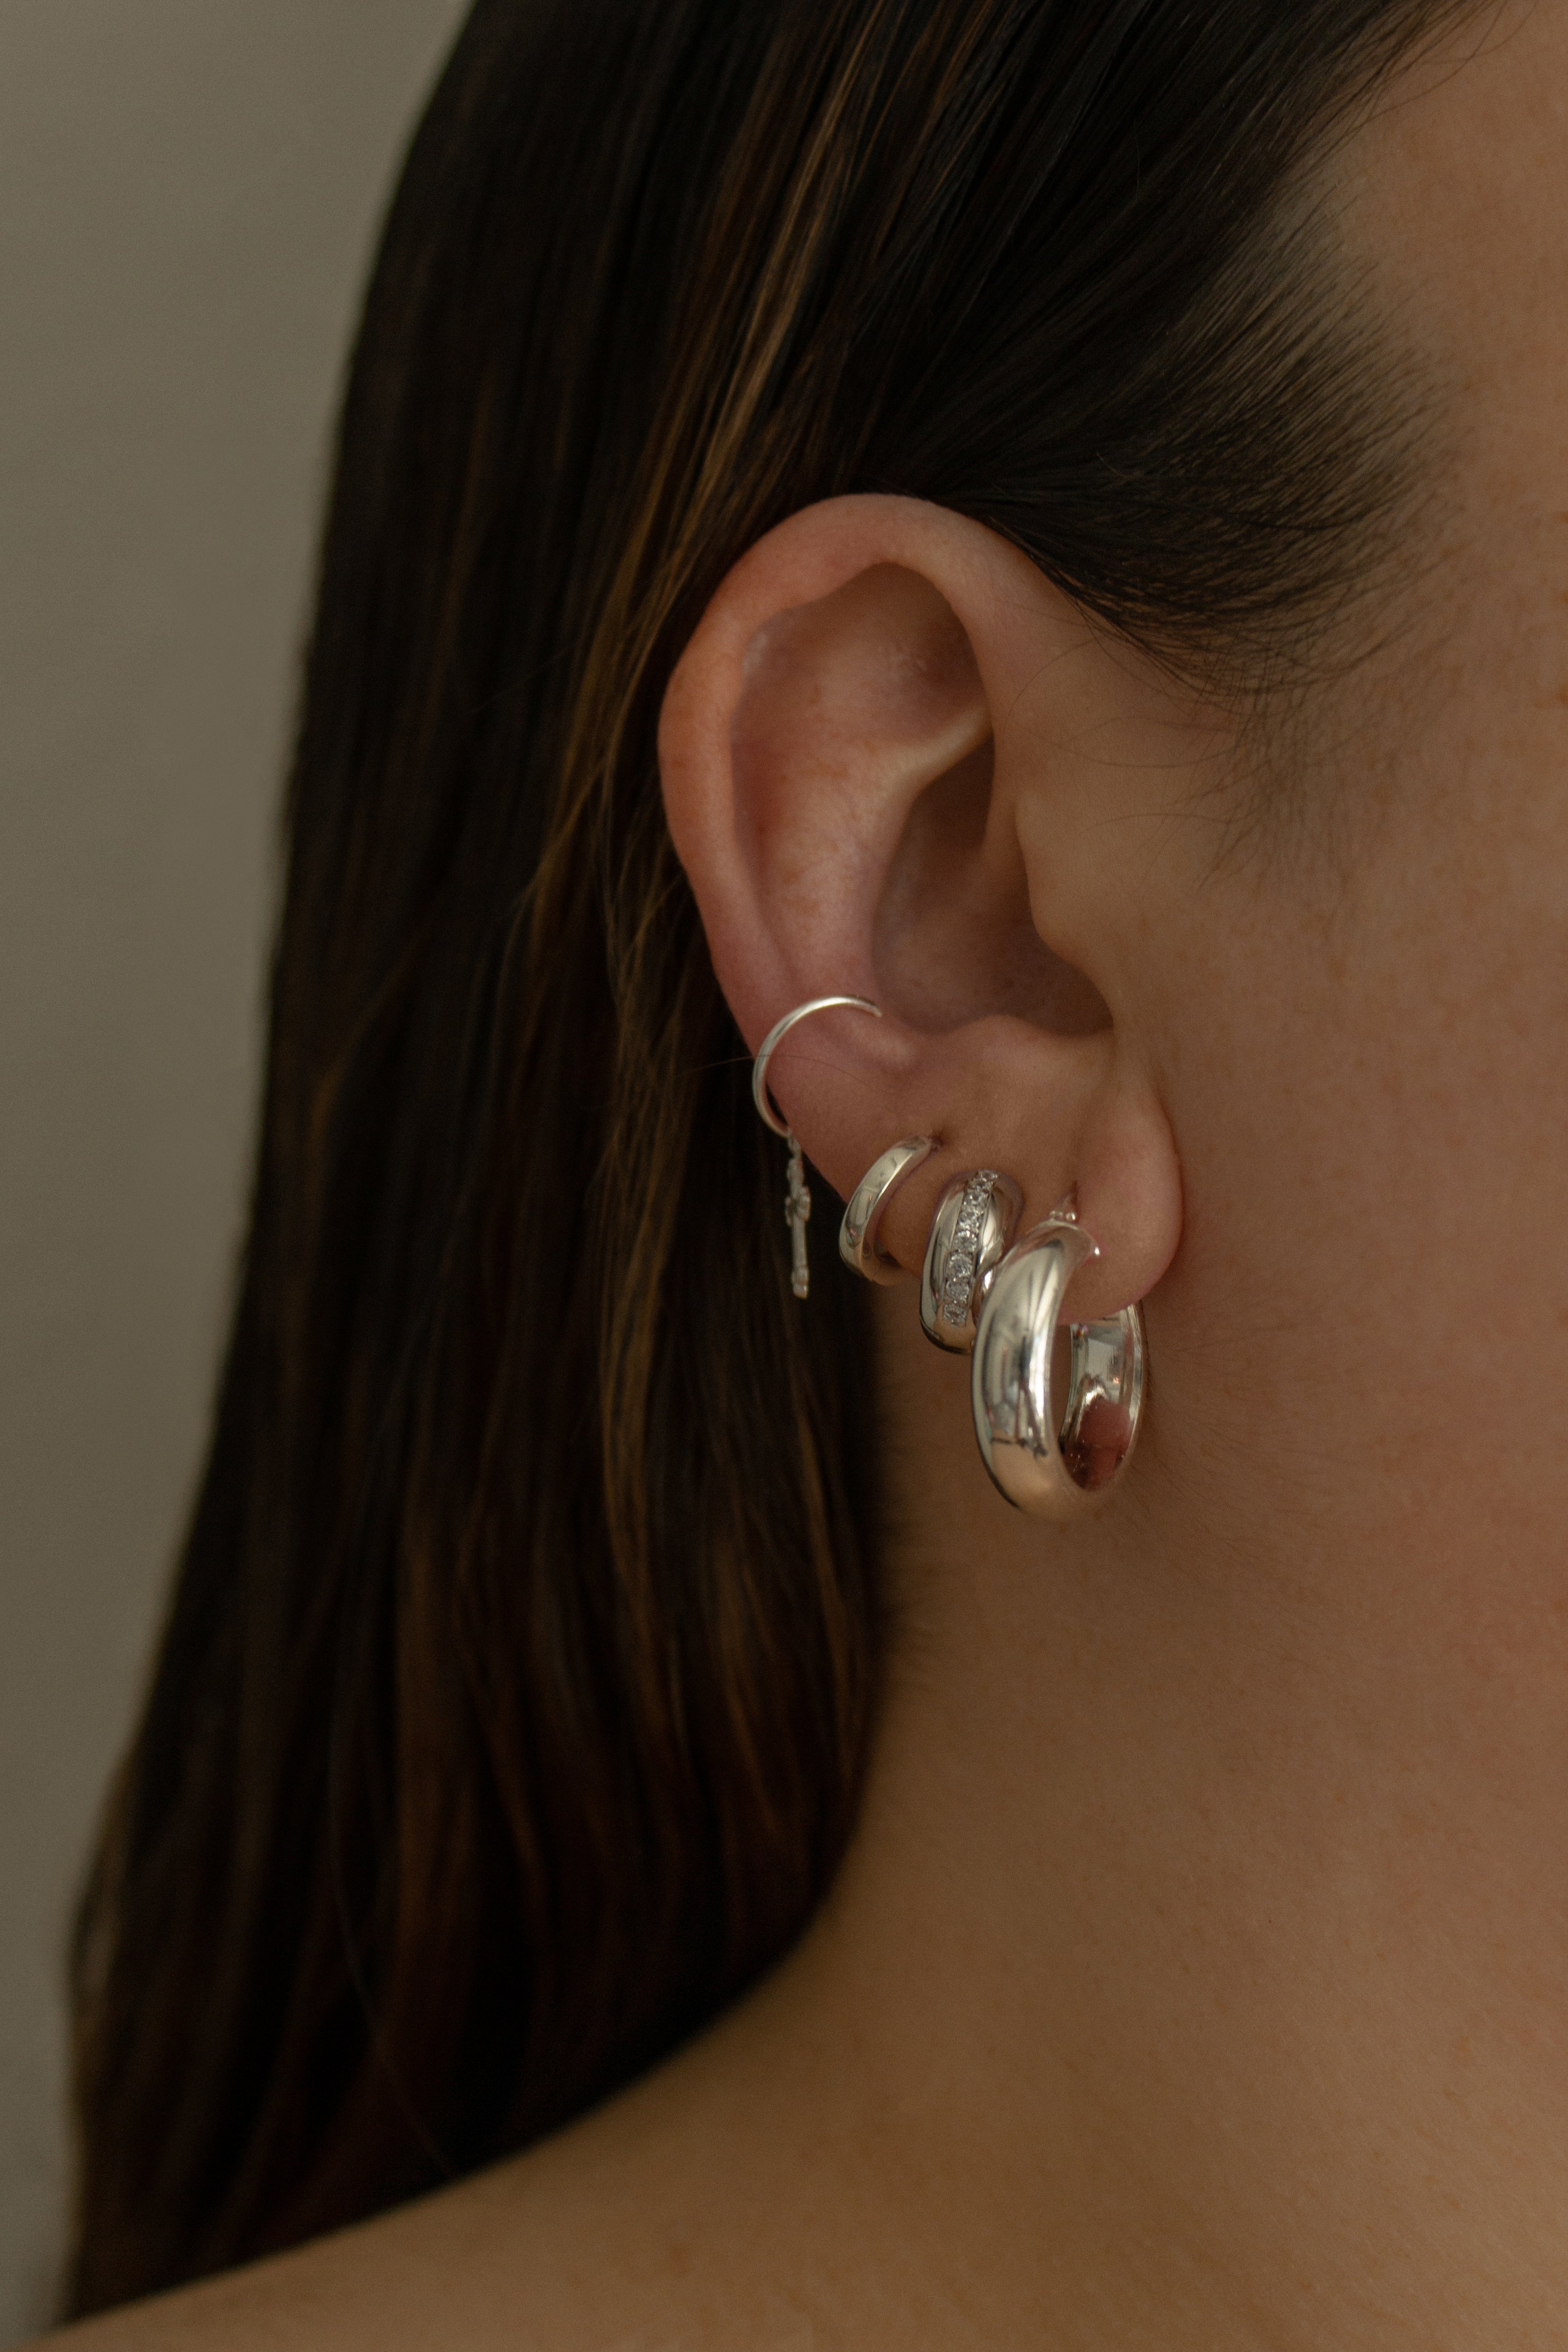 Billie earrings